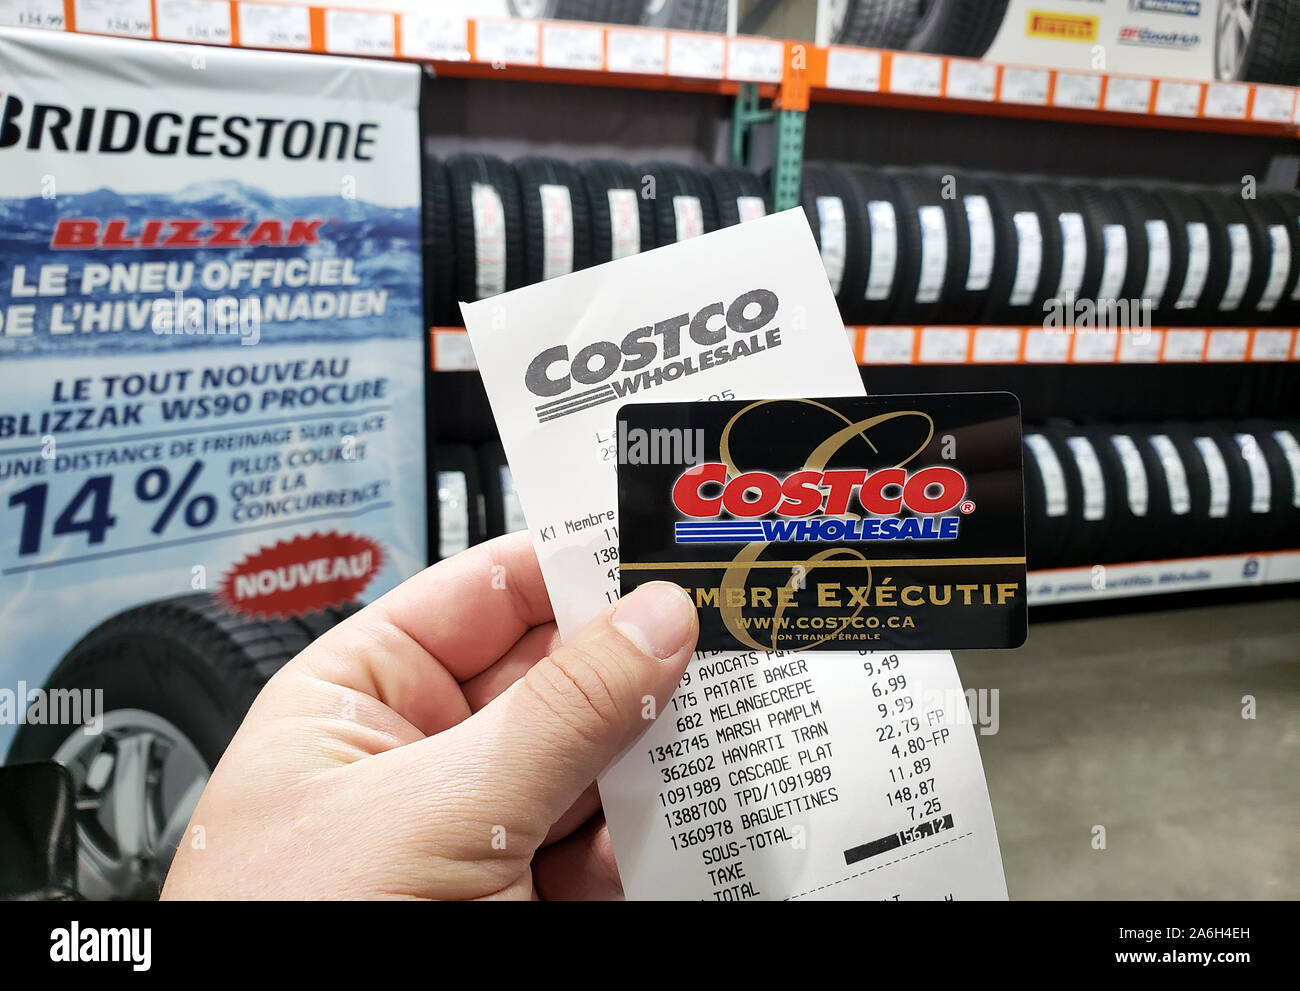 Costco Receipt And Executive Membership Card Editorial Stock Image